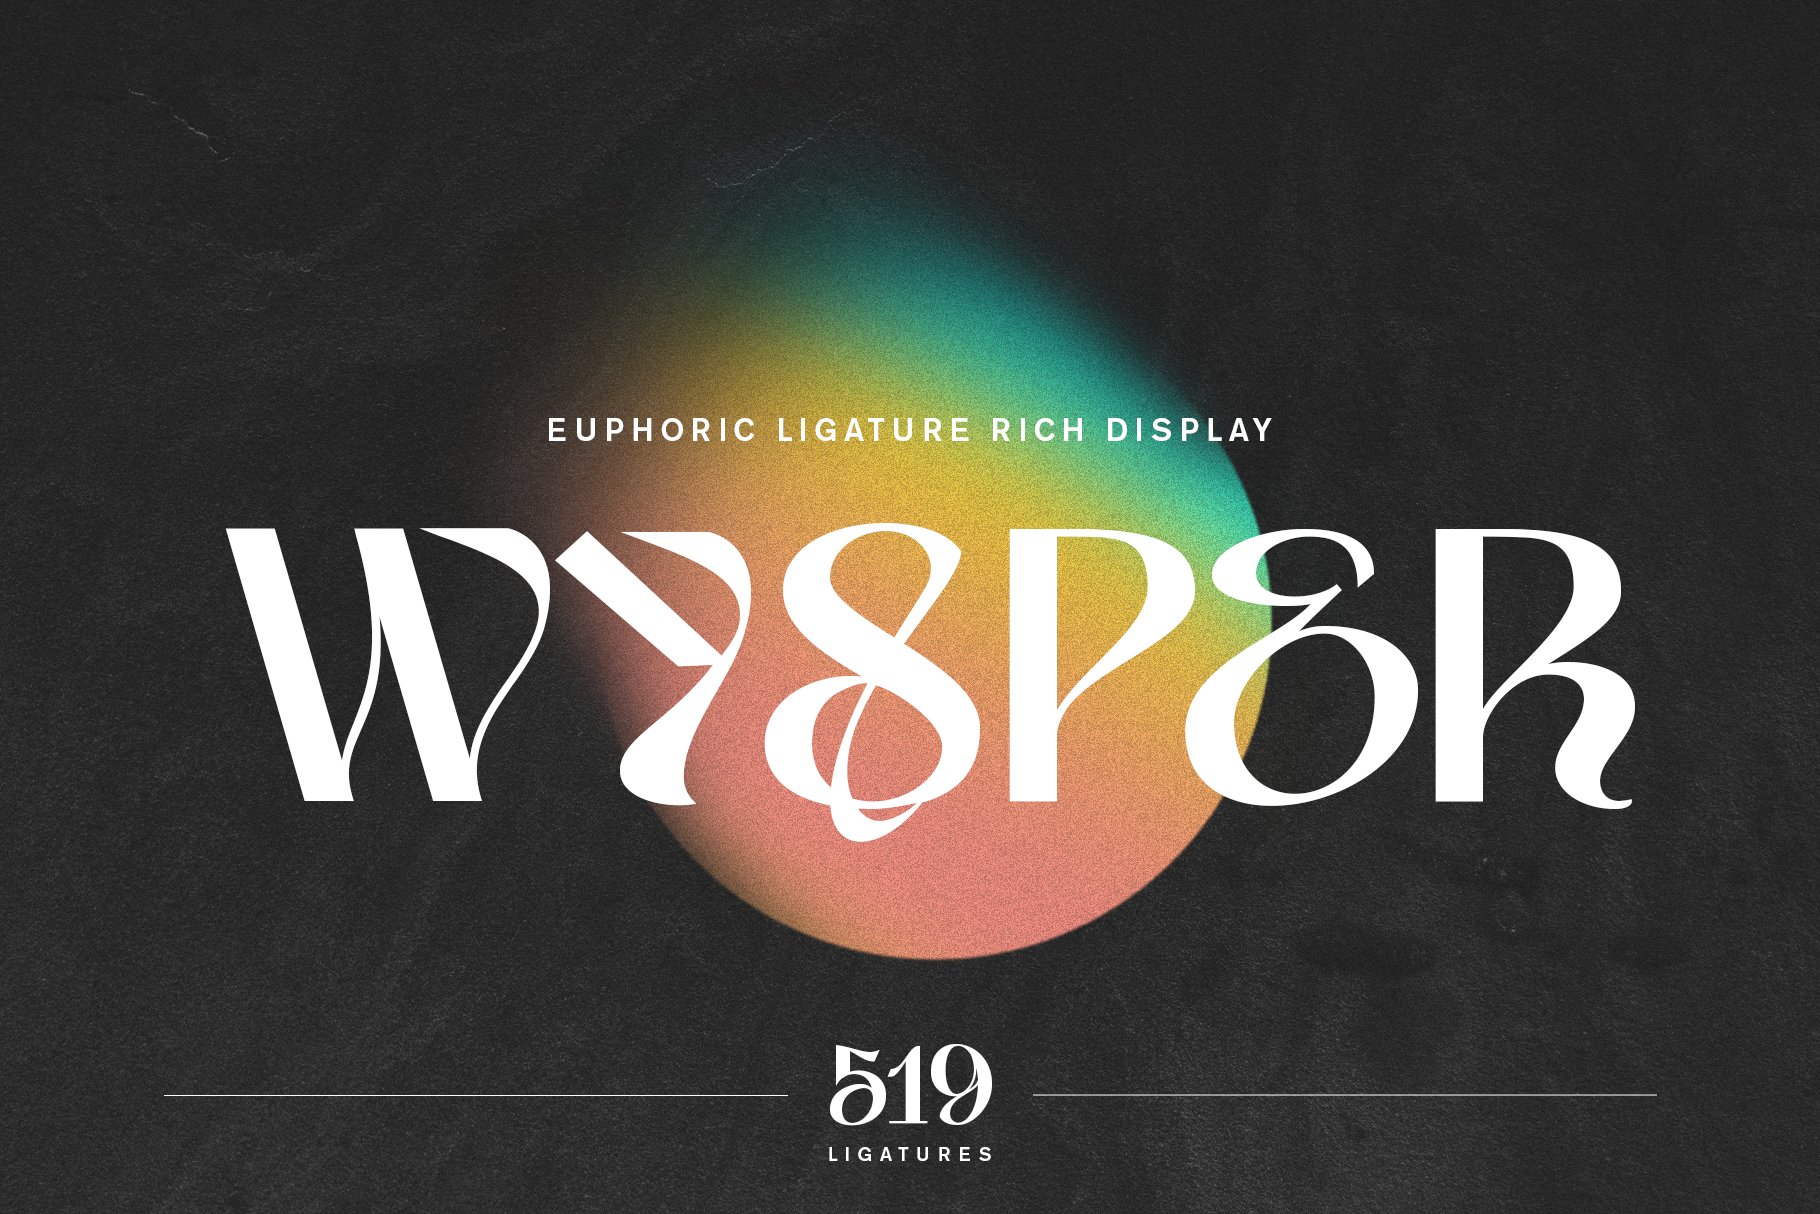 Wysper Font cover image.